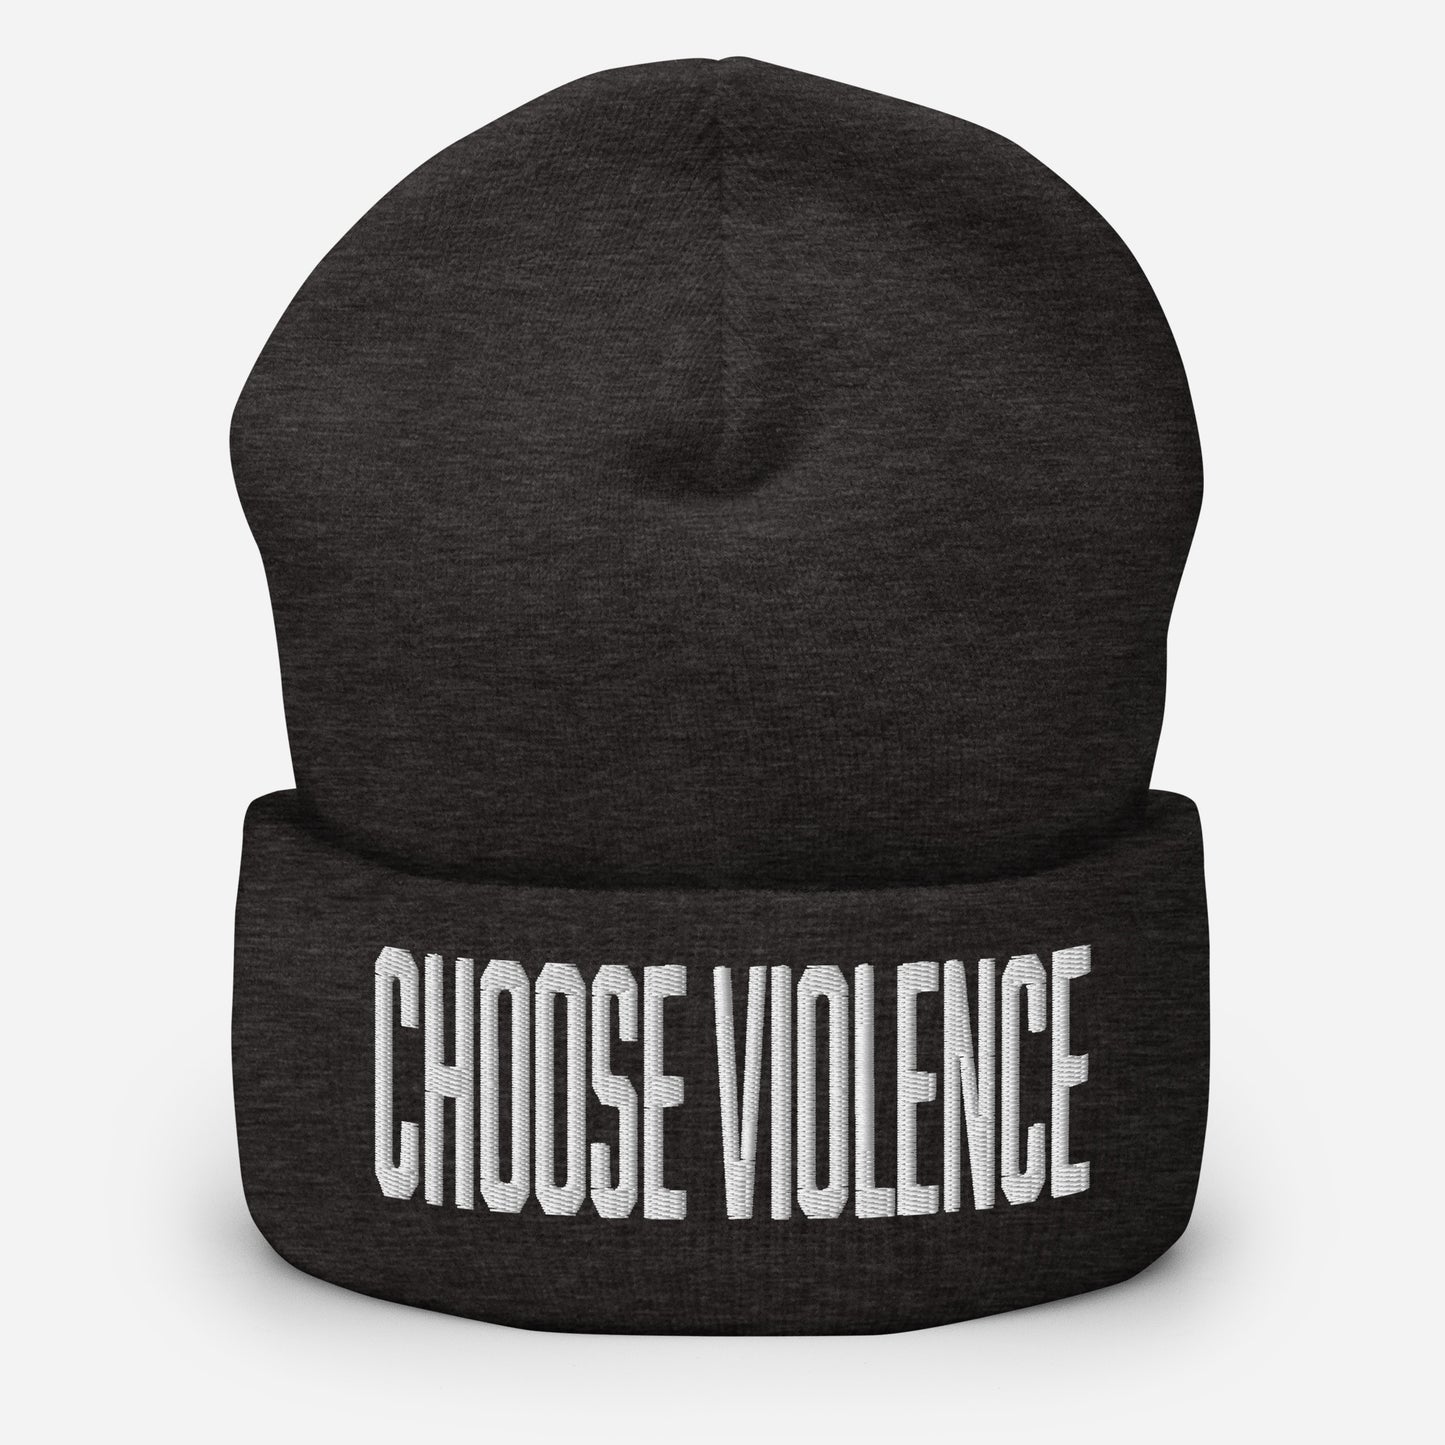 Choose Violence Cuffed Beanie